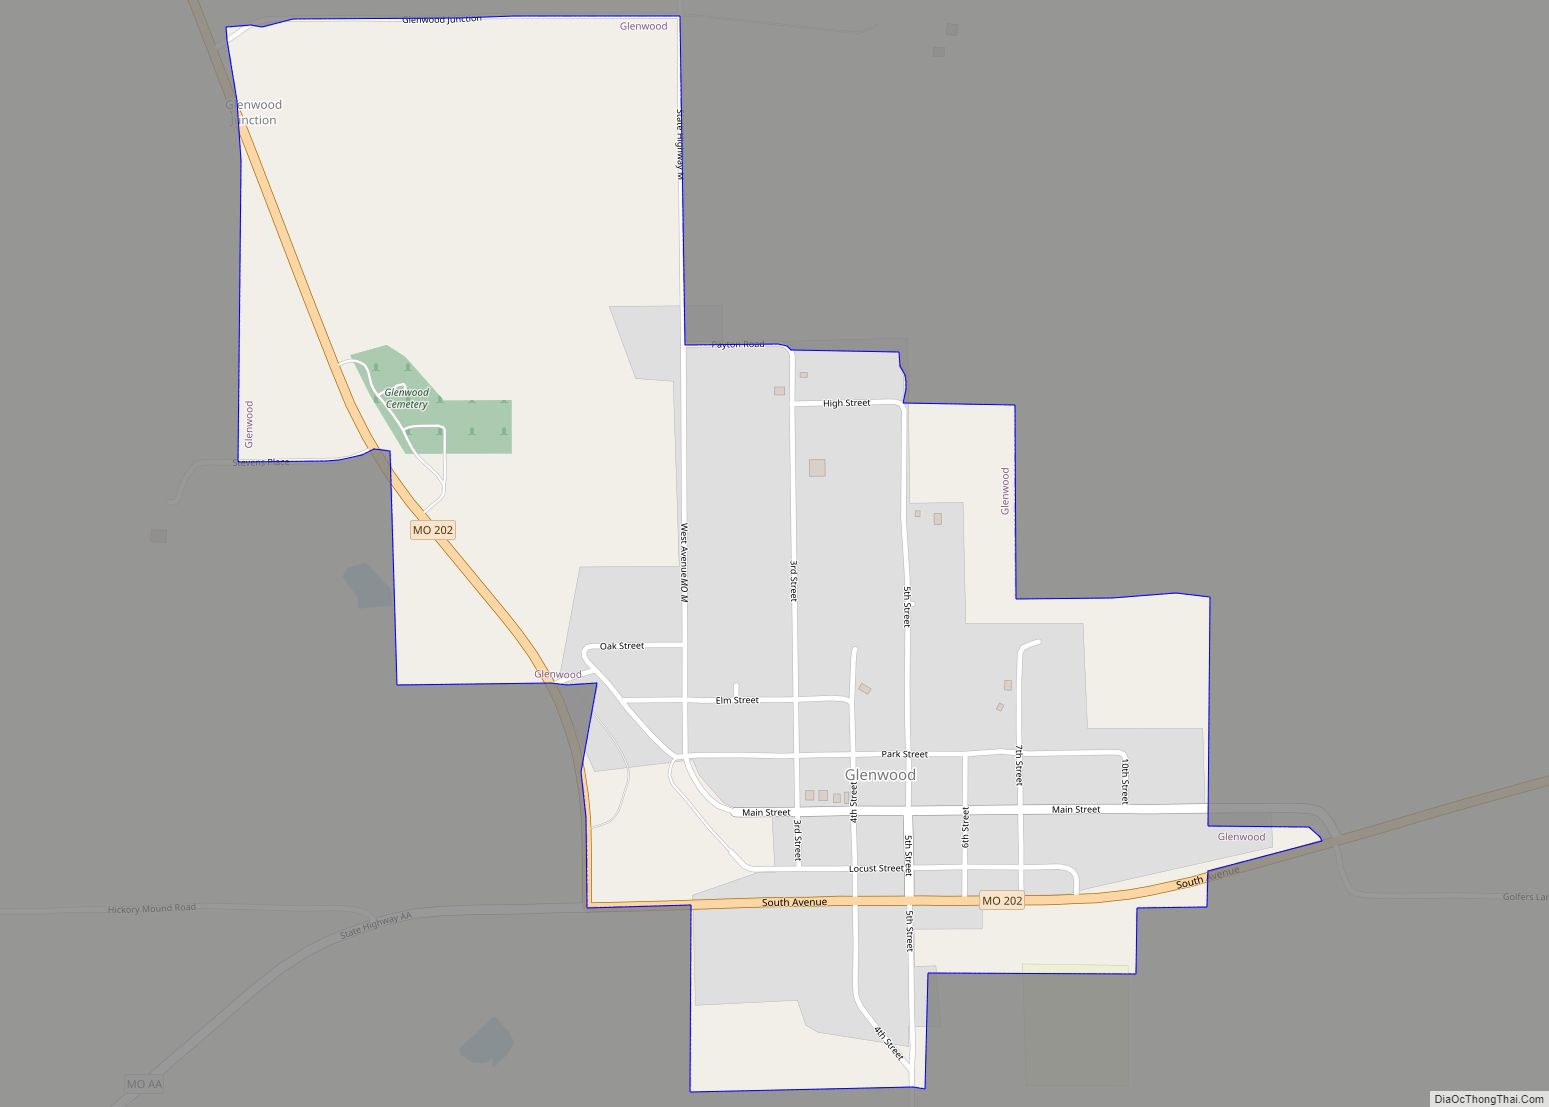 Map of Glenwood village, Missouri